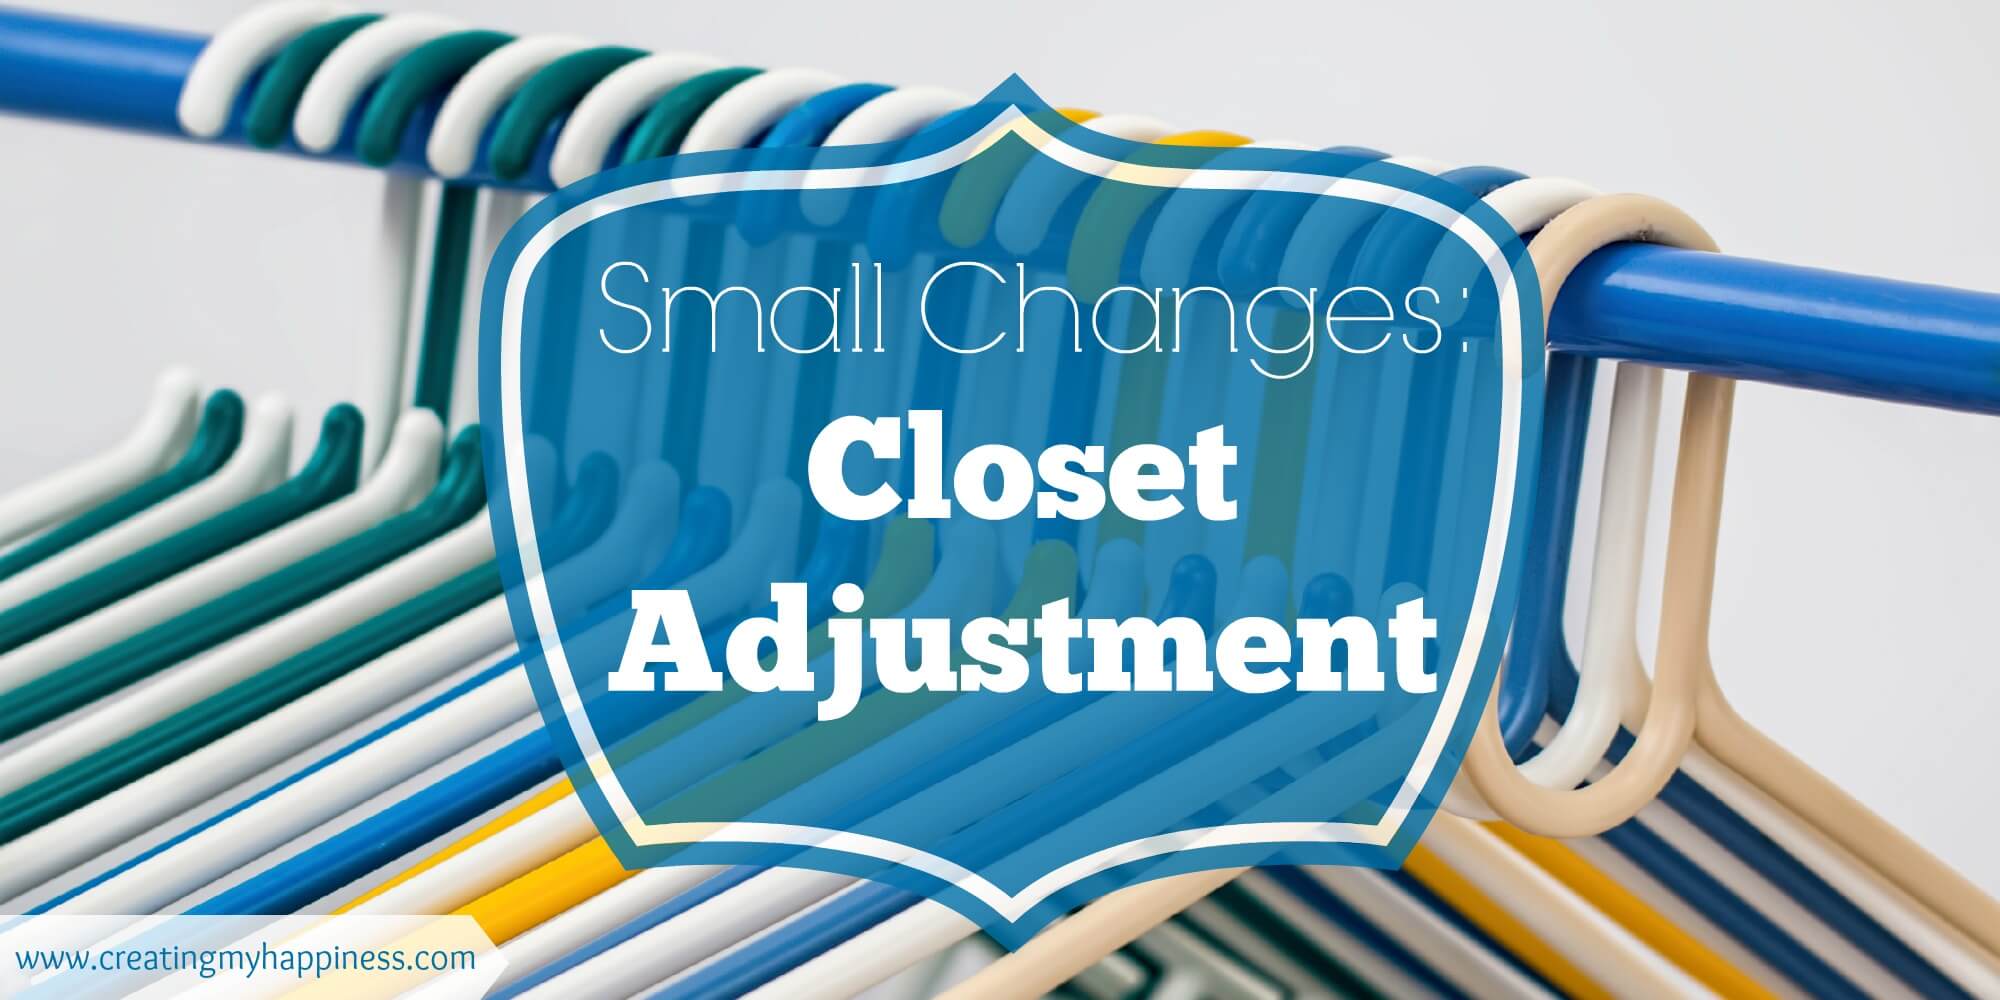 Closet Adjustment